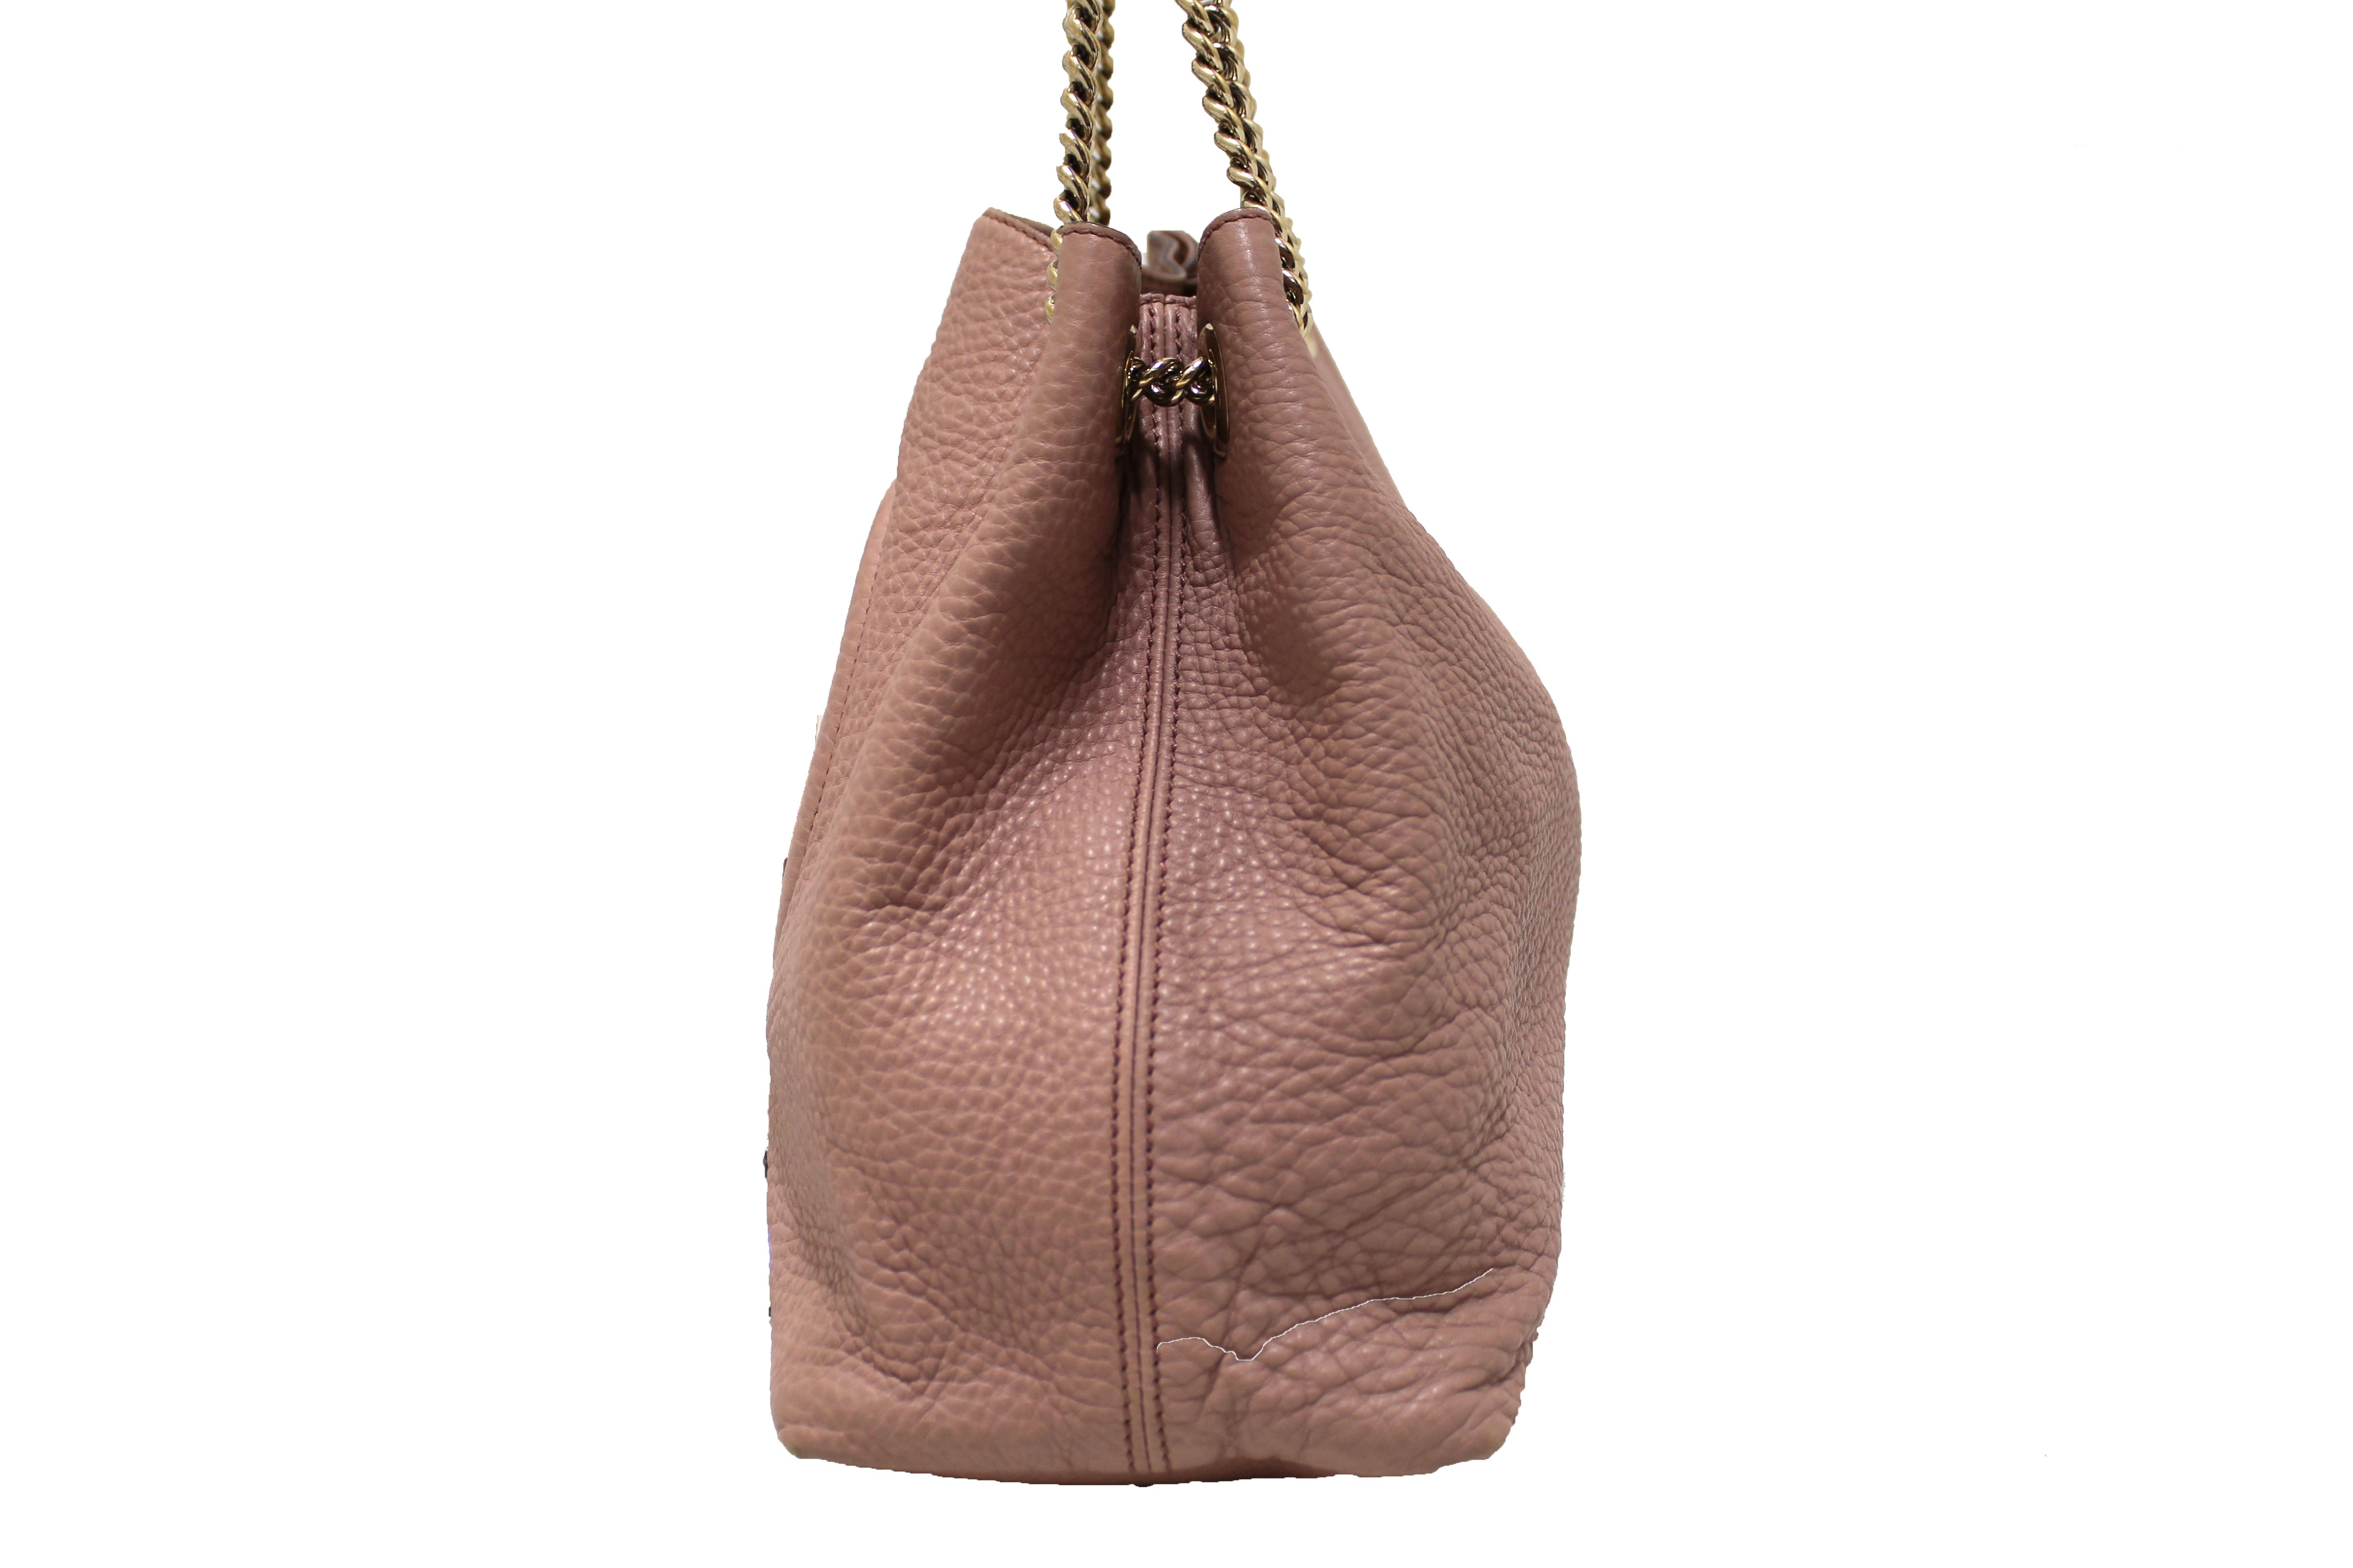 Authentic Gucci Light Pink Pebbled Calfskin Medium Soho Chain Shoulder Bag